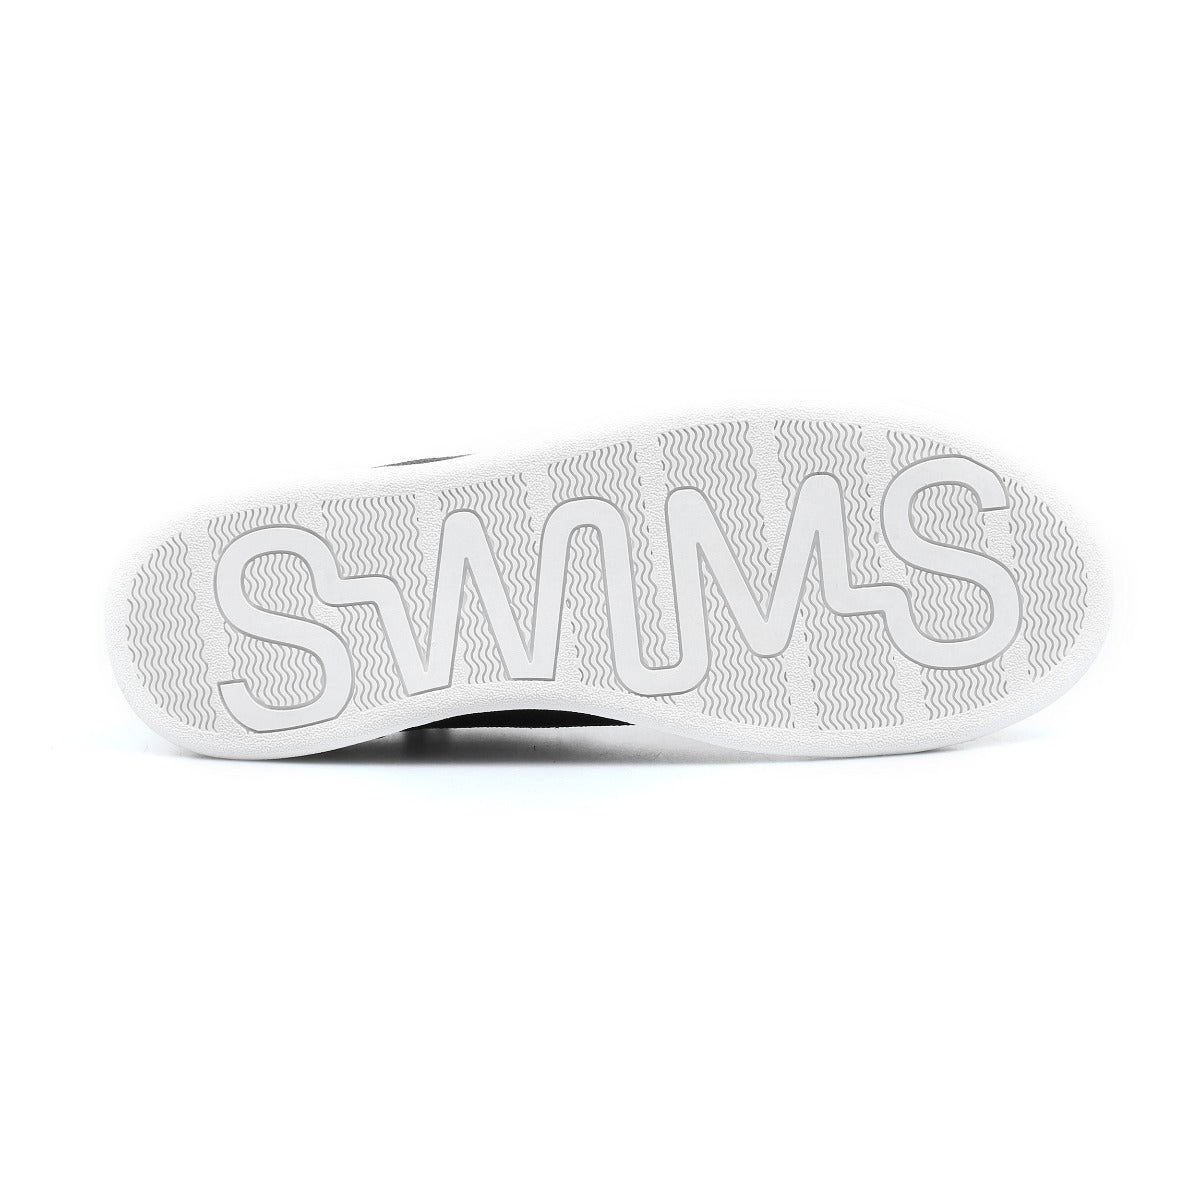 Swims Breeze Tennis Knit Shoe in Navy & White